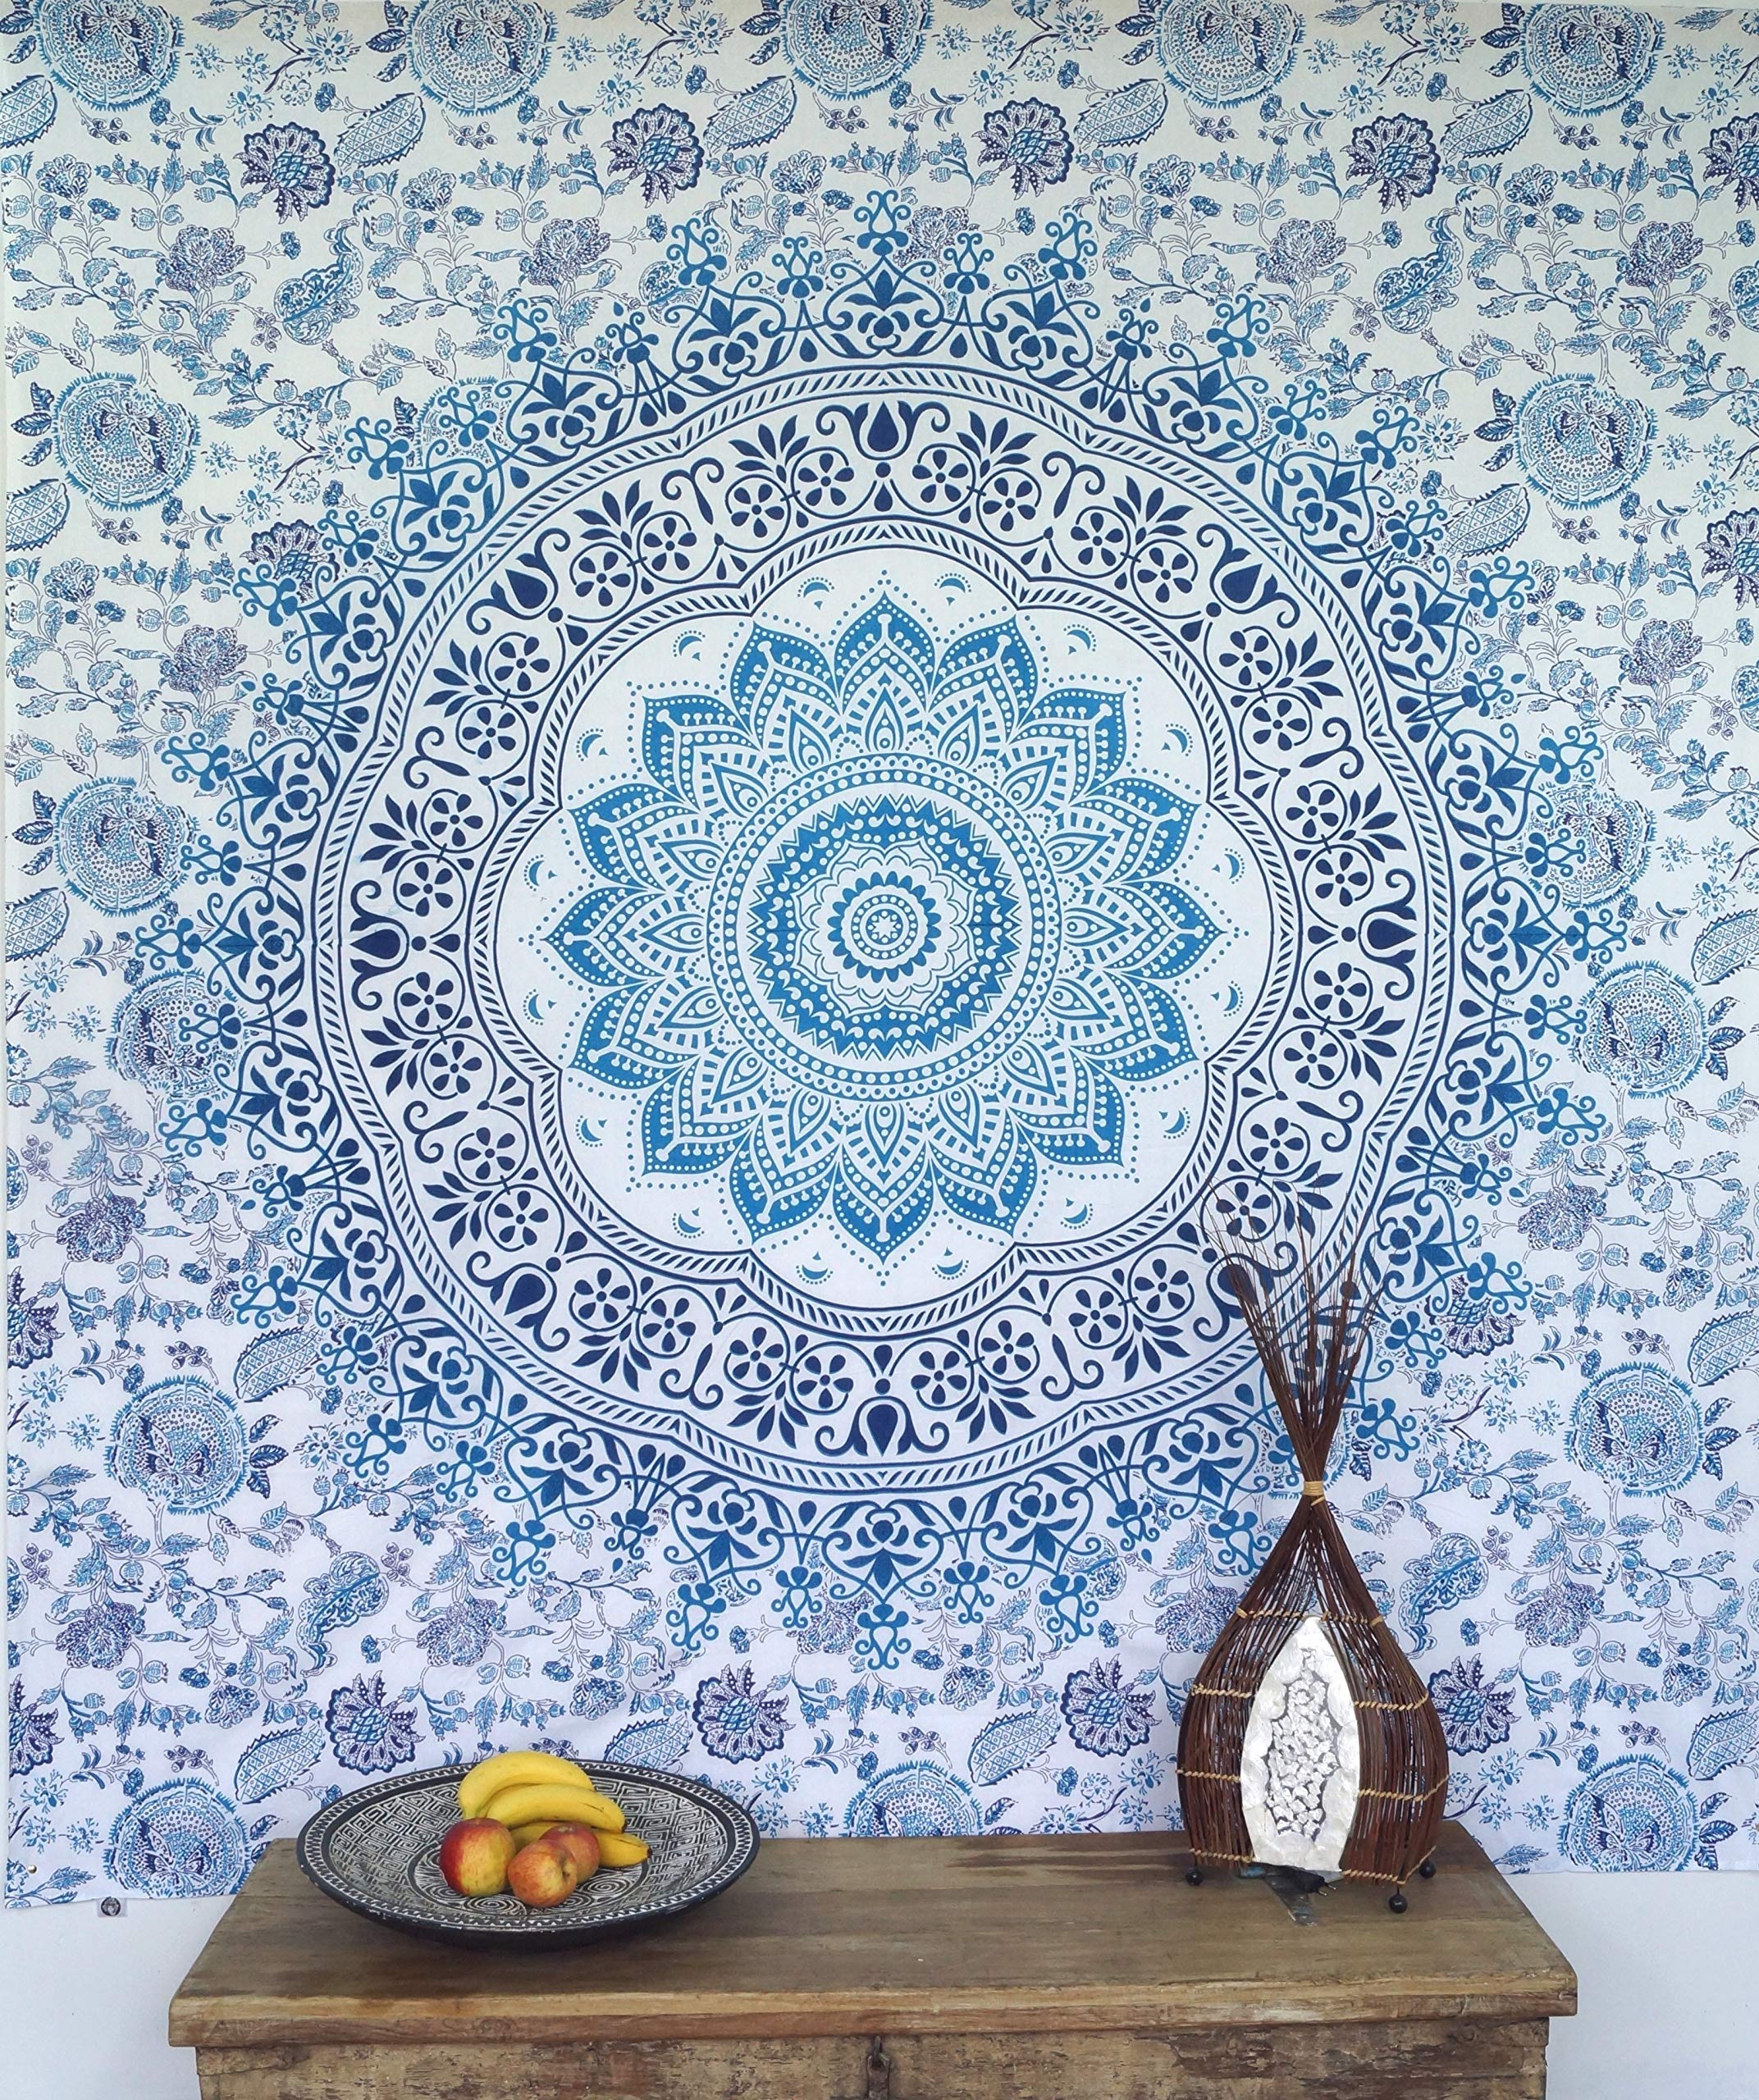 GURU SHOP Boho-Style Wandbehang, Indische Tagesdecke Mandala Druck - Blau/türkis/weiß, Baumwolle, 210x220x0,2 cm, Bettüberwurf, Sofa Überwurf